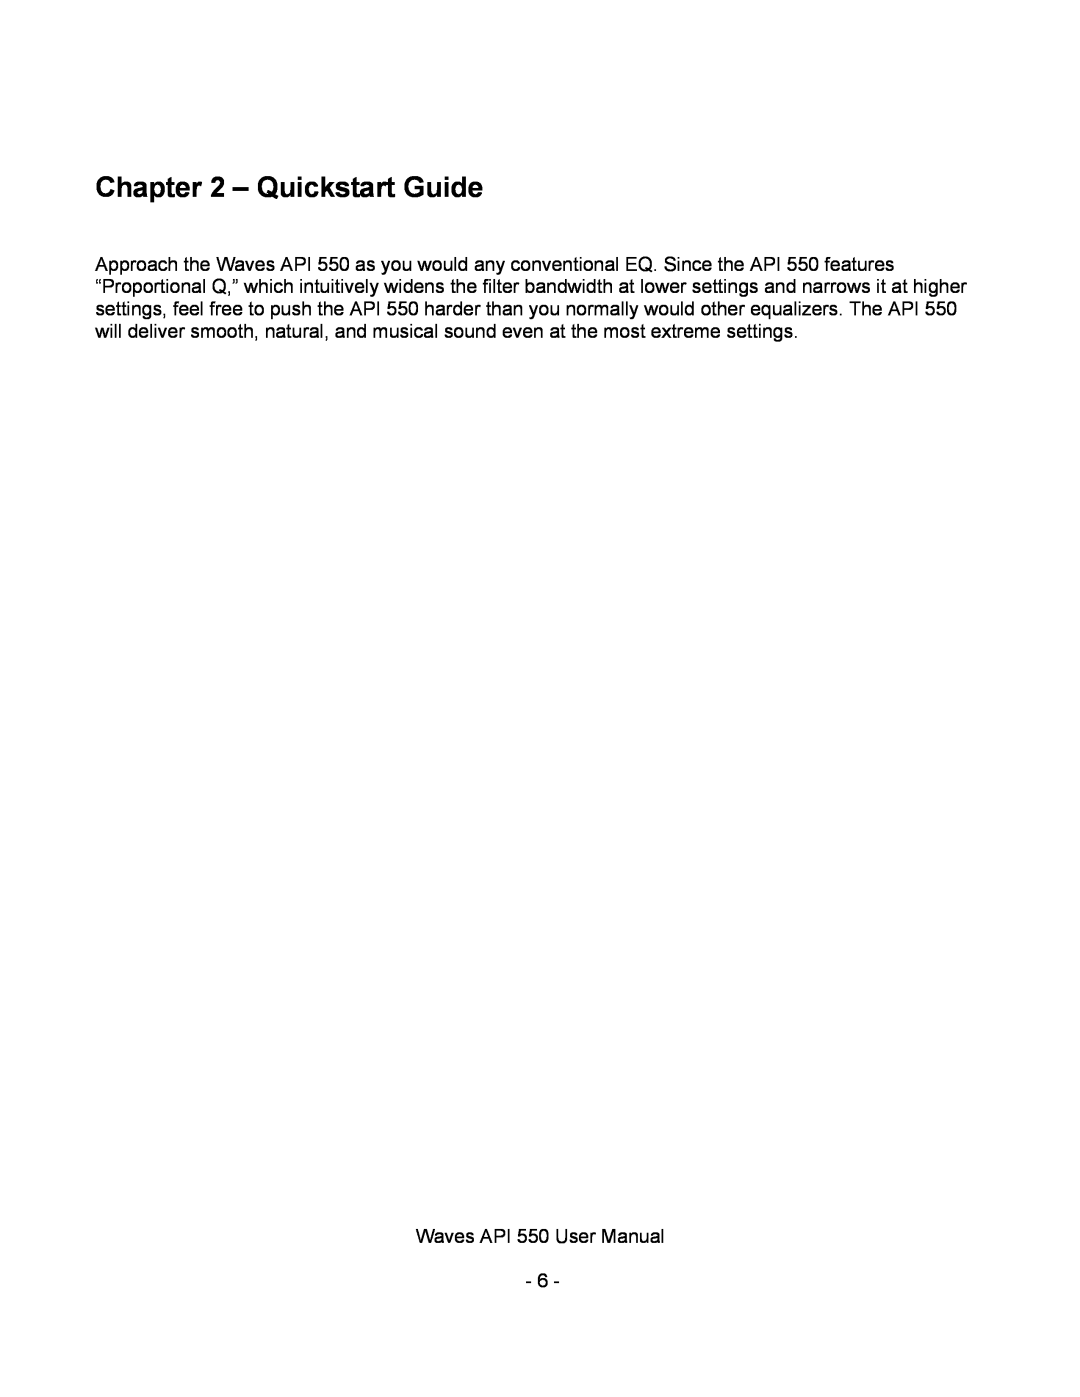 Waves API 550 user manual Quickstart Guide 